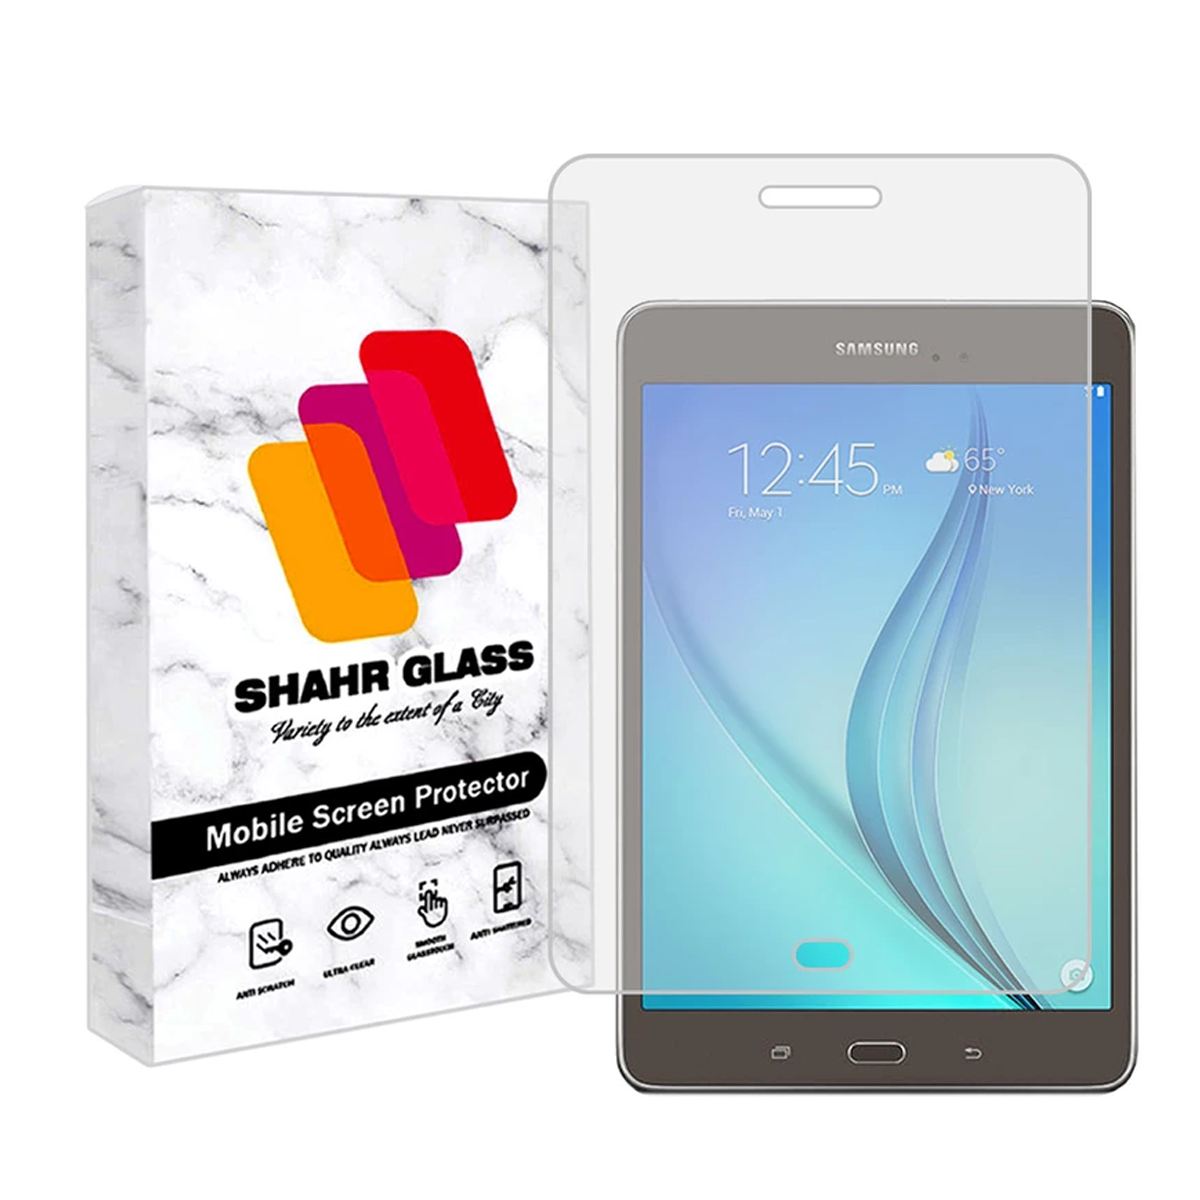 گلس تبلت سامسونگ Galaxy Tab A 8.0 2015 شهر گلس مدل TS1SHA-بی رنگ شفاف